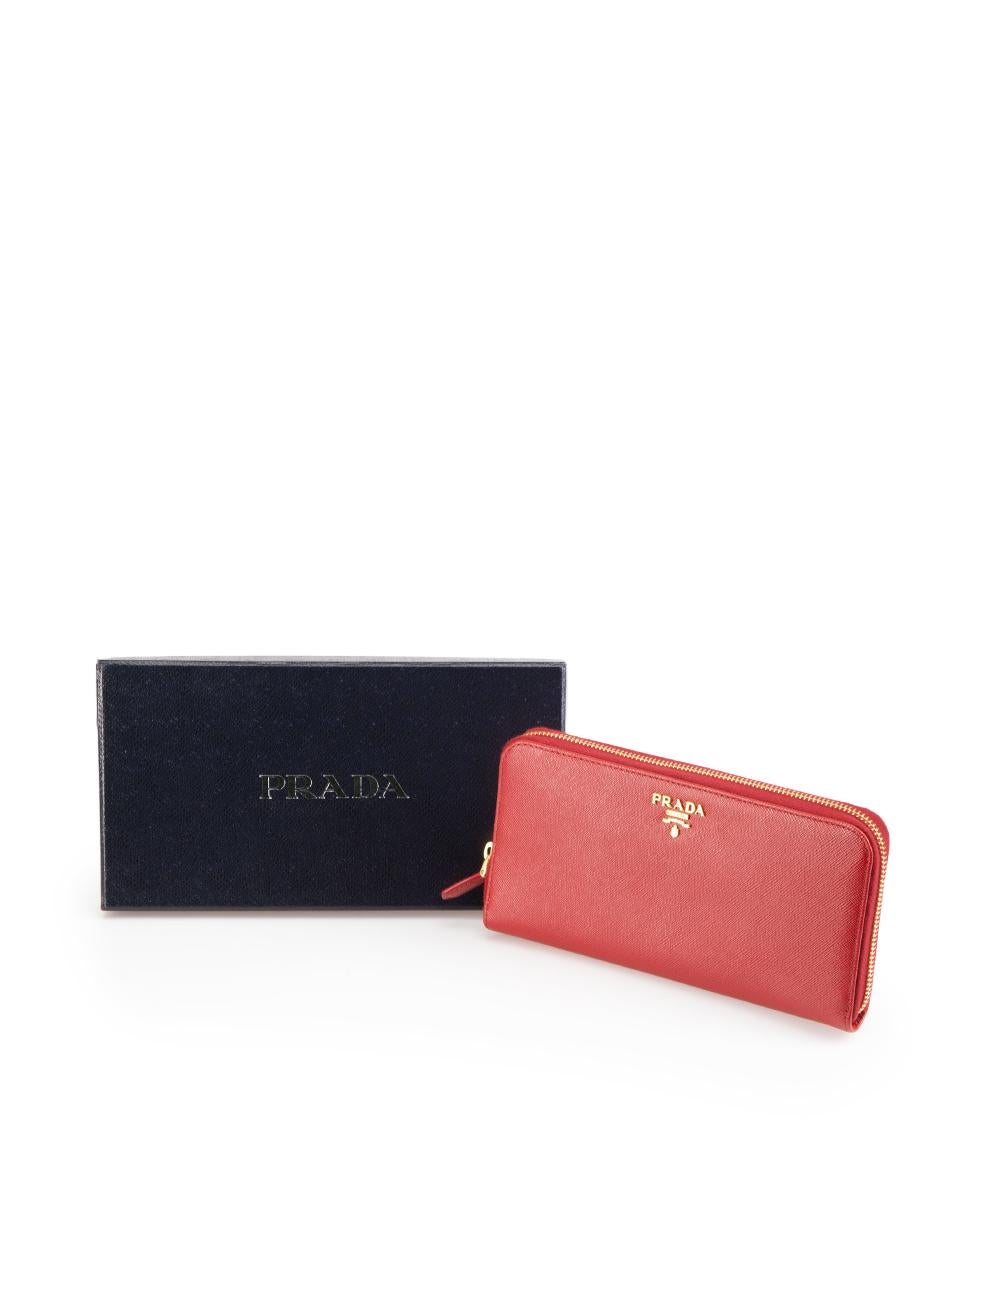 Prada Red Saffiano Leather Zip Around Wallet For Sale 2